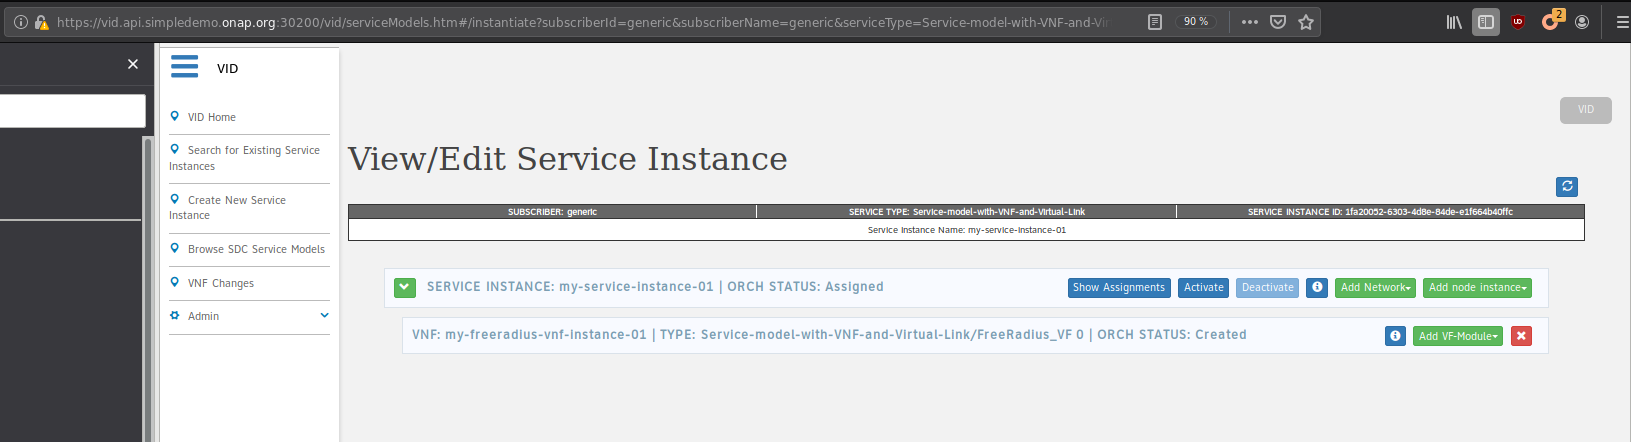 docs/images/create-service-instance-alacarte-after-vnf-instantiated.png